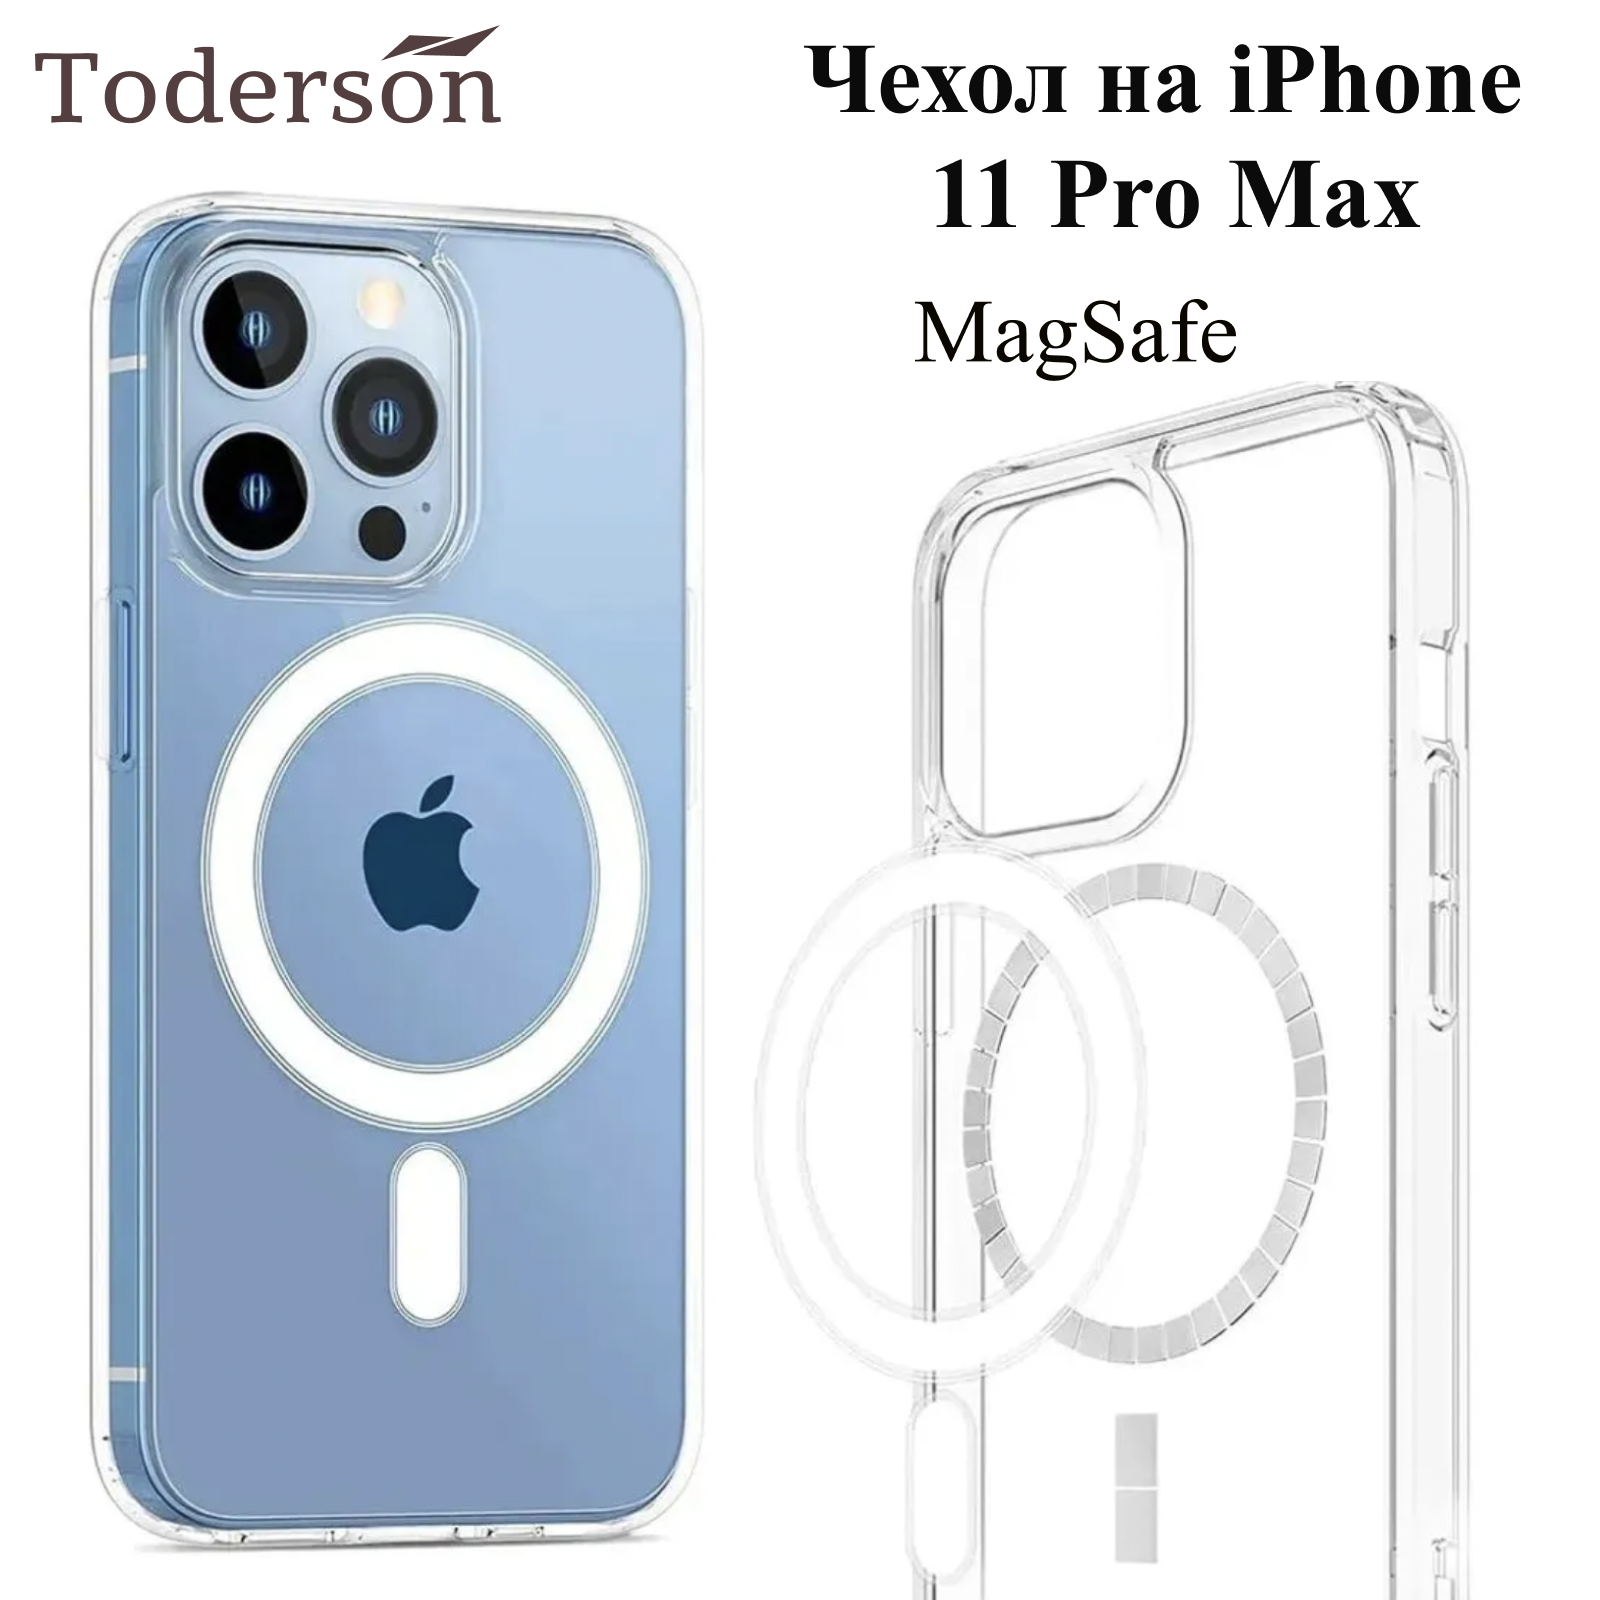 Чехол на iPhone 11 Pro Max MagSafe Toderson